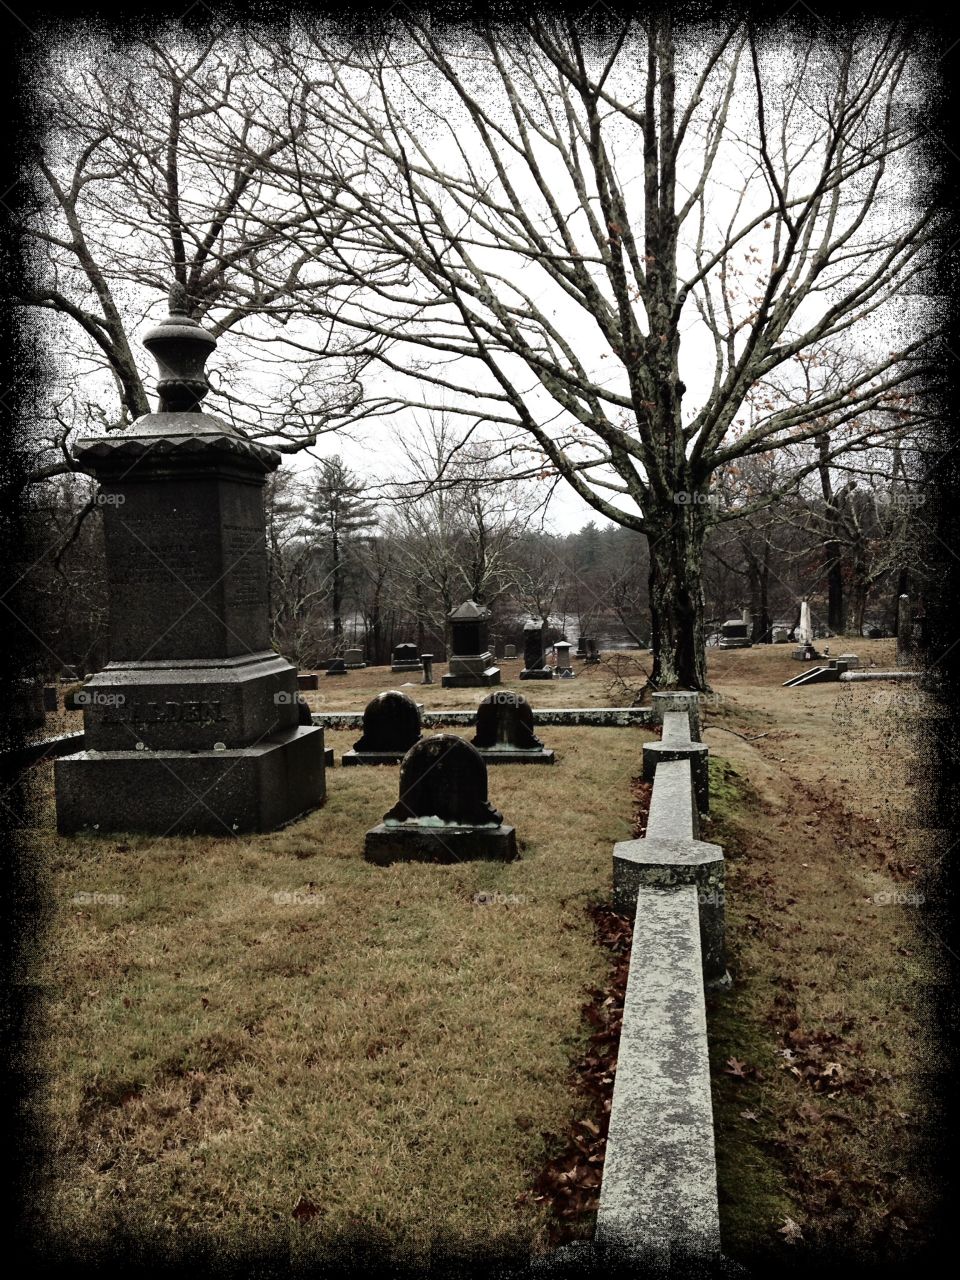 
Morning walk through the cemetery 
